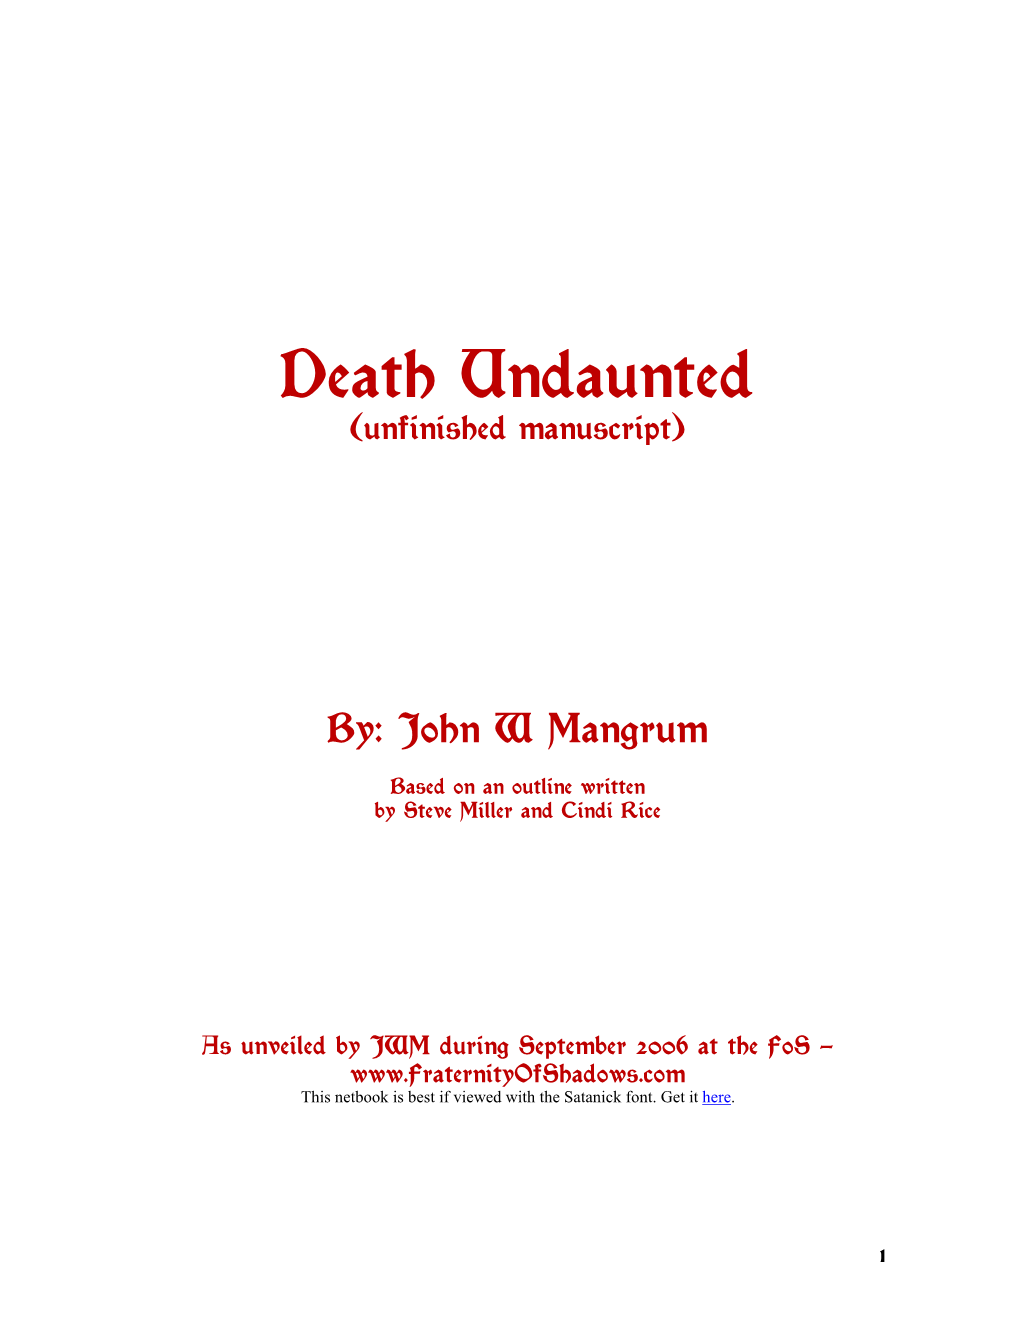 Death Undaunted (Unfinished Manuscript)